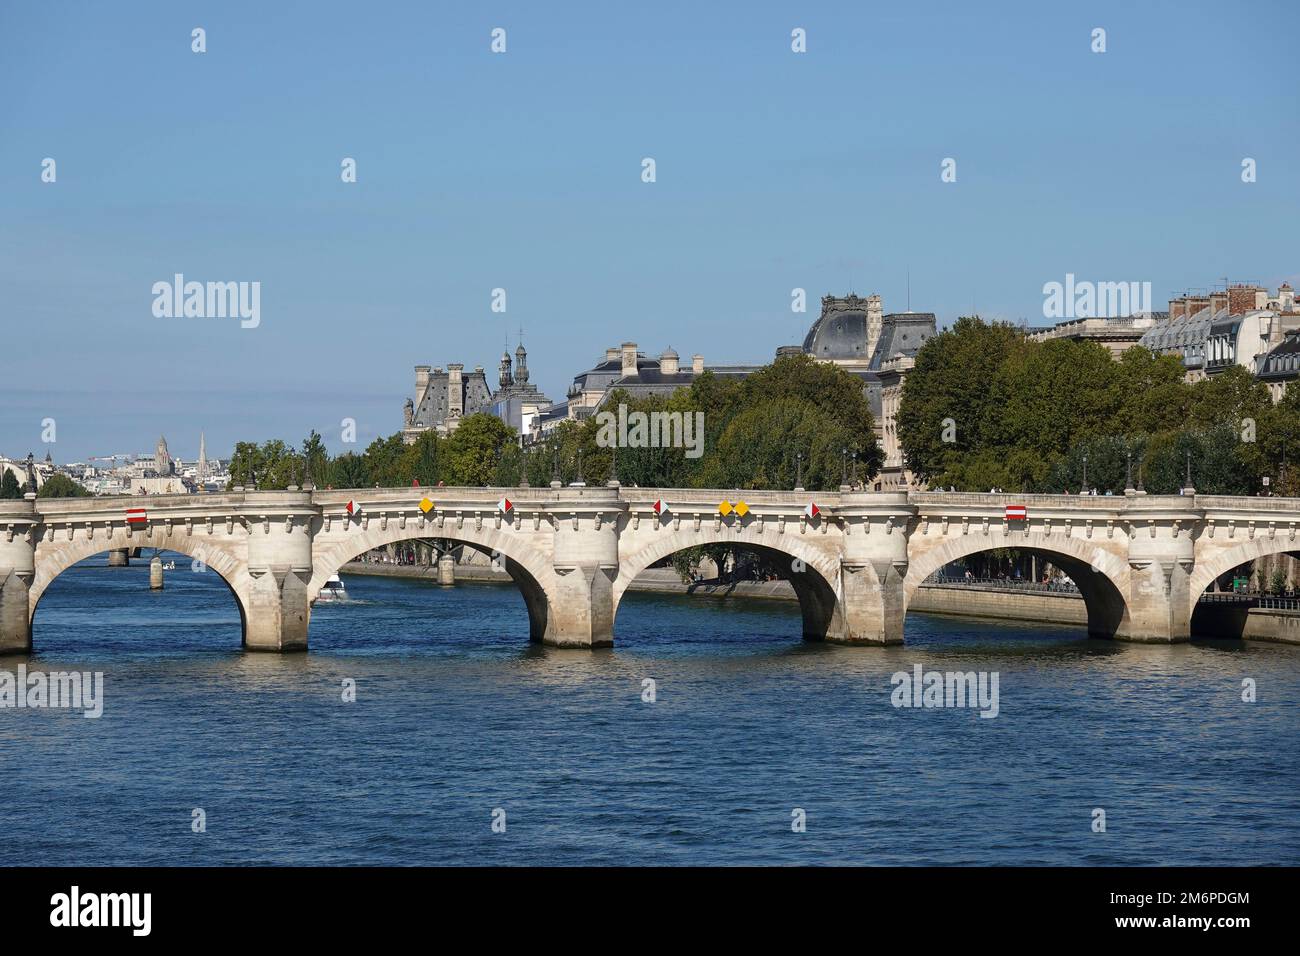 France, Paris, Pont de la Concorde, is a stone-arch bridge crossing the Seine River in Paris at the Place de la Concorde   Photo © Fabio Mazzarella/Si Stock Photo